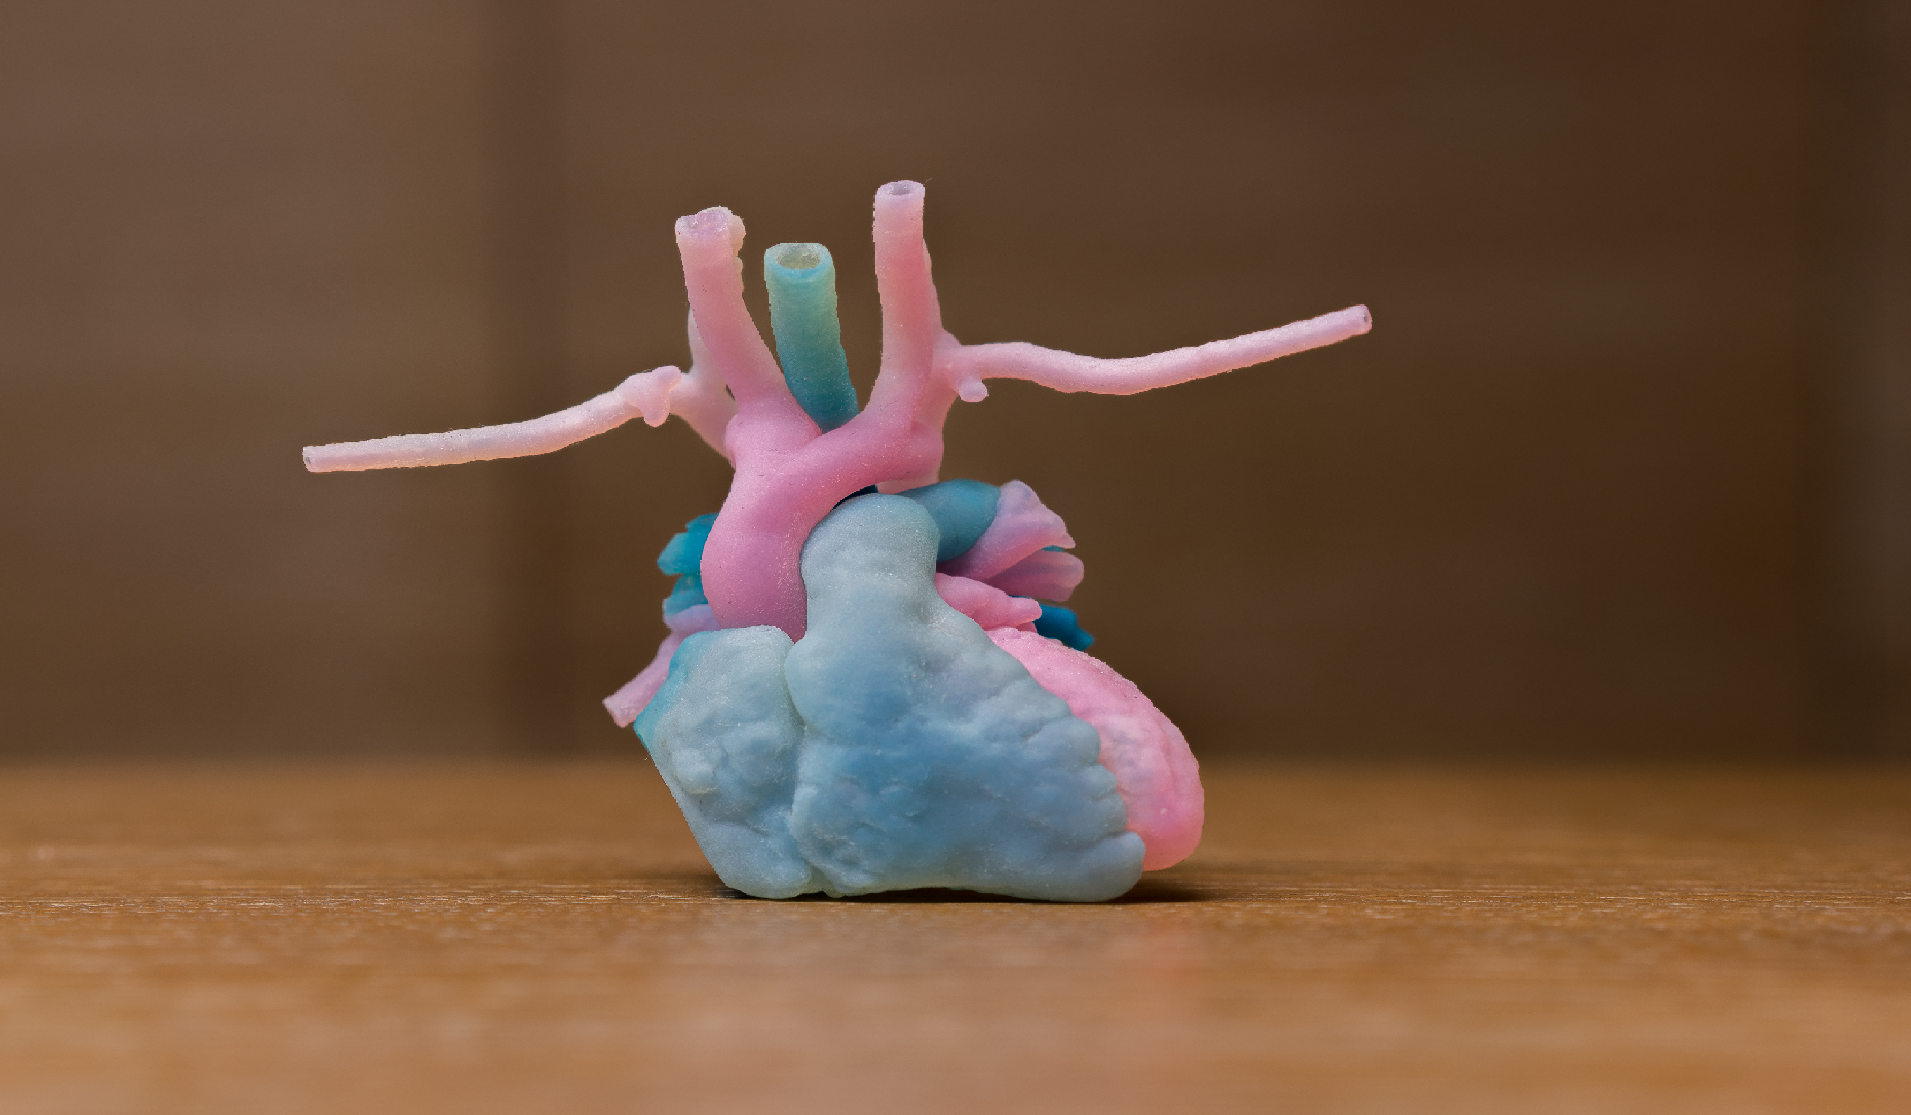 Medical model of a heart from 3DLife. Photo via 3DLife.